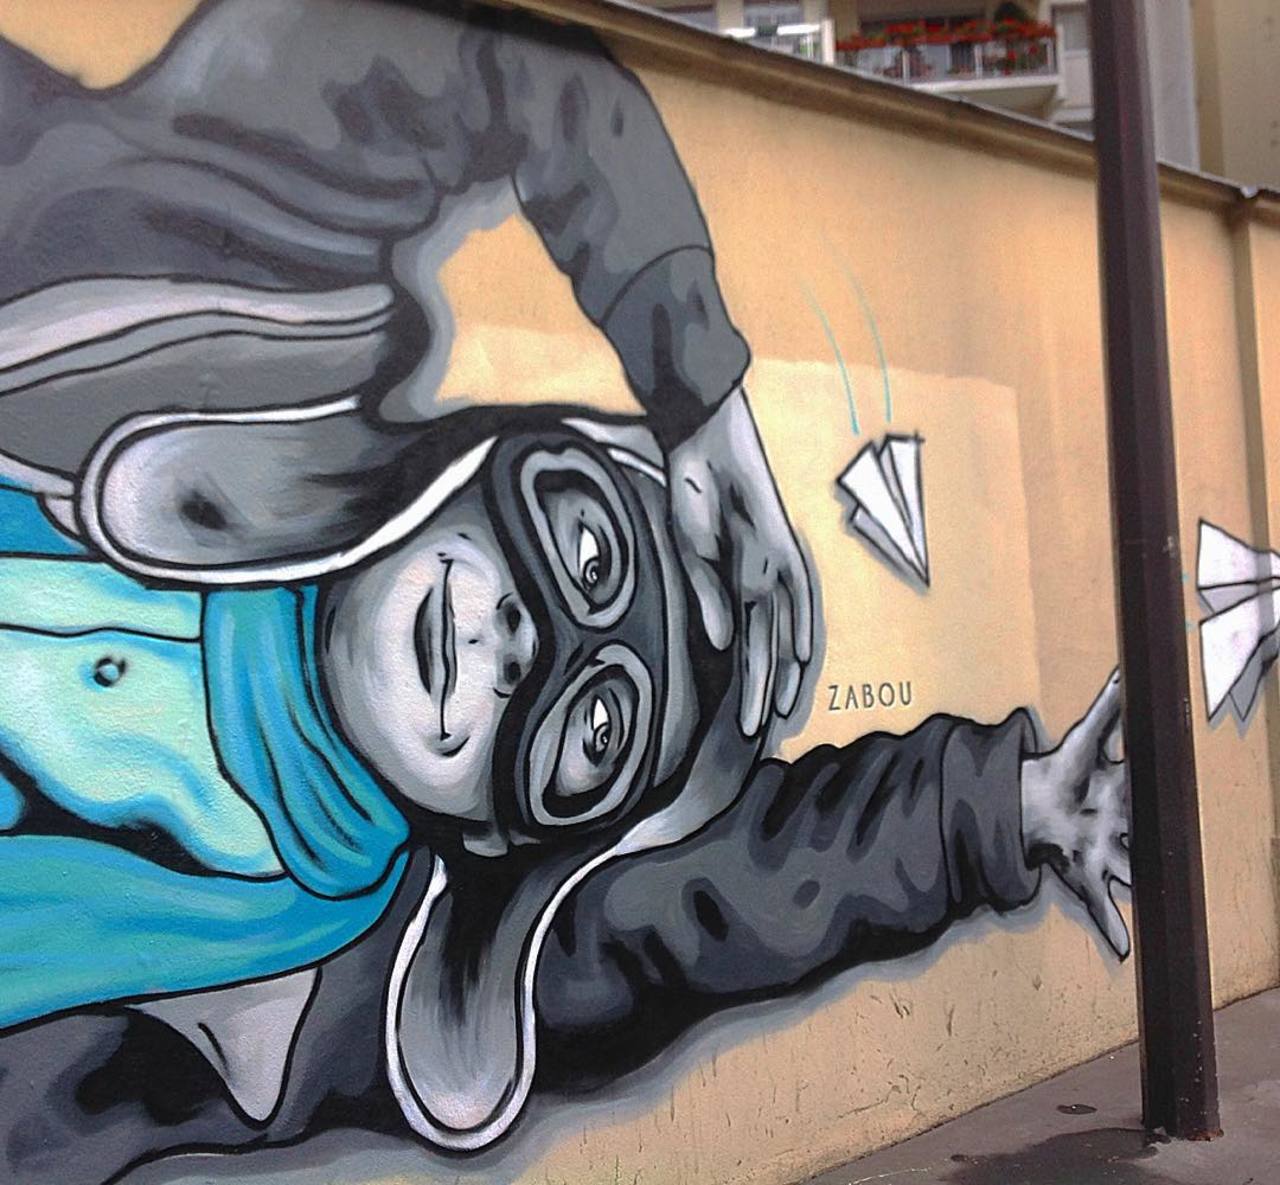 circumjacent_fr: #Paris #graffiti photo by stefetlinda http://ift.tt/1PyAiwM #StreetArt http://t.co/YpINxP6YfX